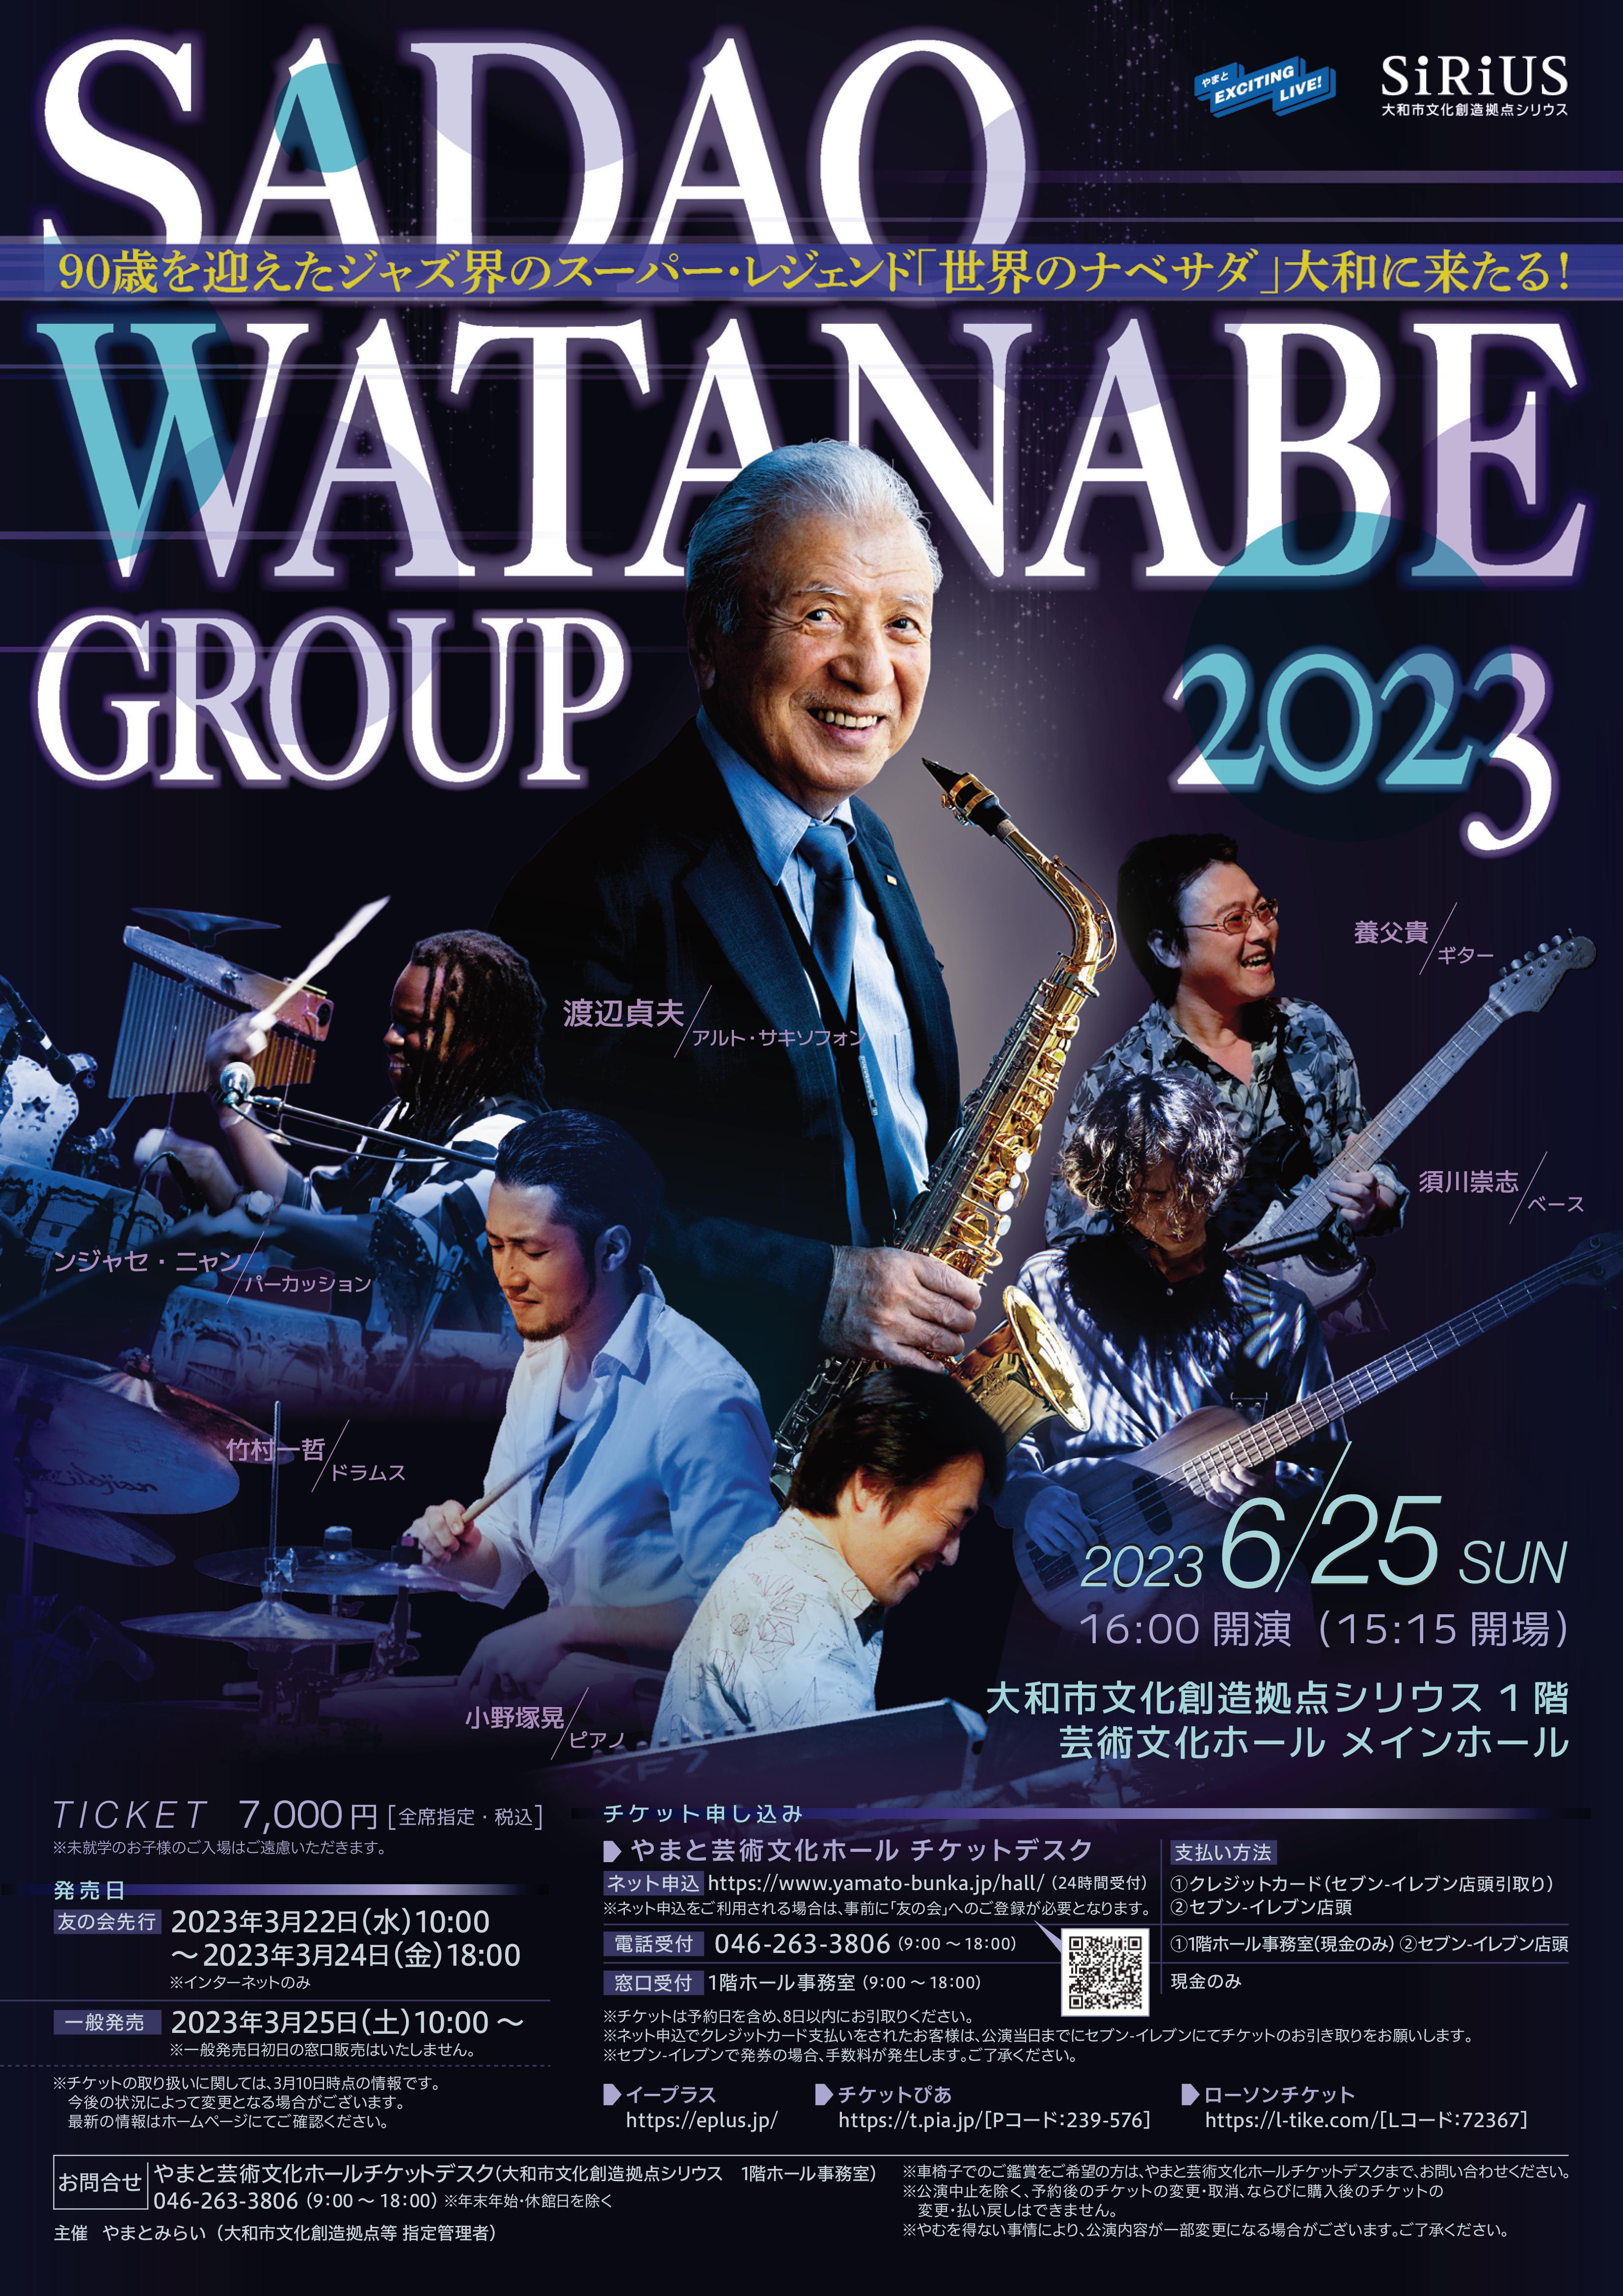 【完売御礼】SADAO WATANABE GROUP 2023